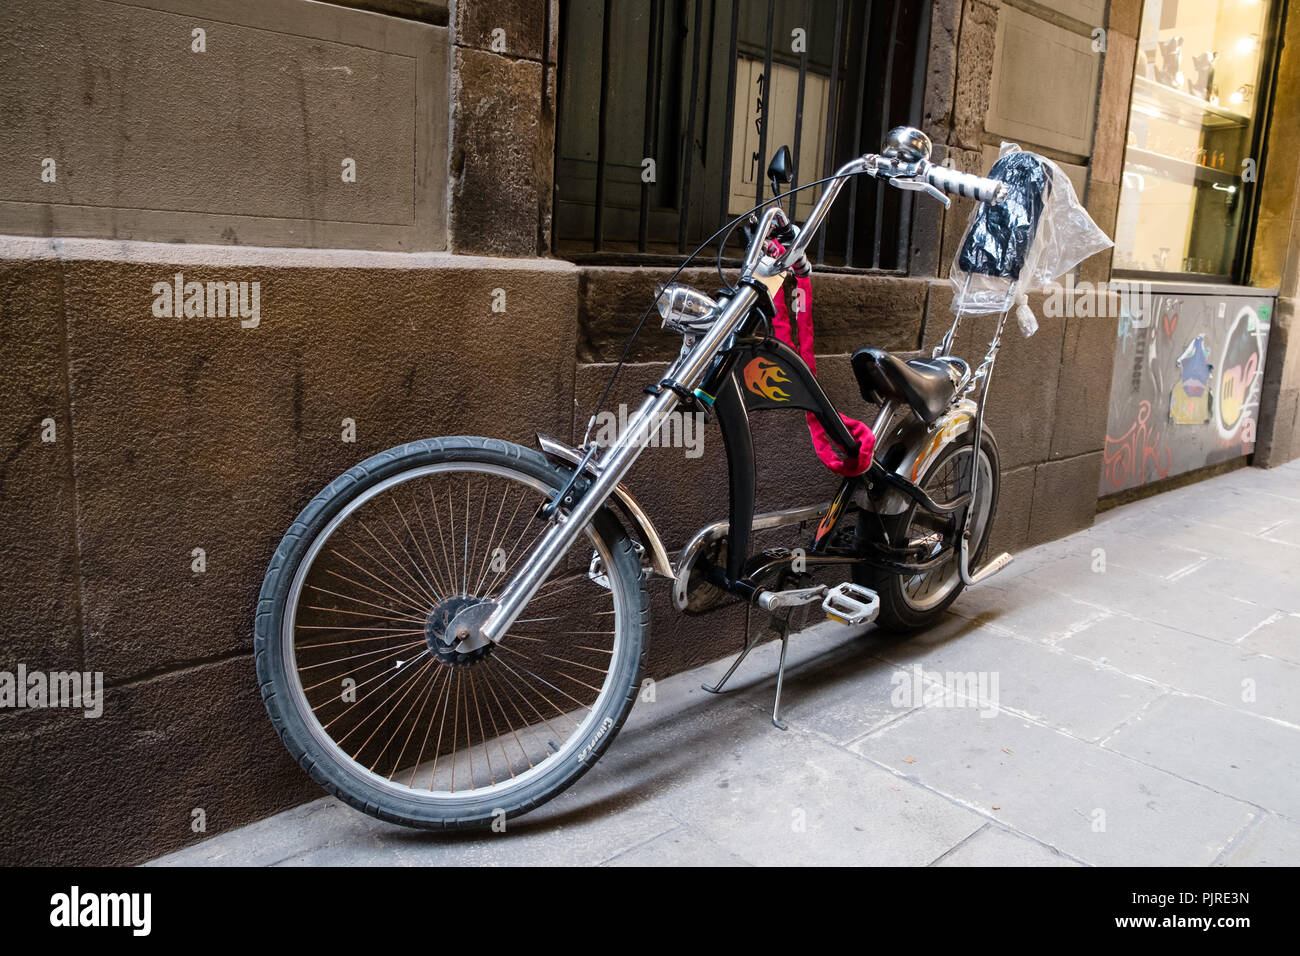 https://c8.alamy.com/comp/PJRE3N/chopper-bike-on-barcelona-street-PJRE3N.jpg